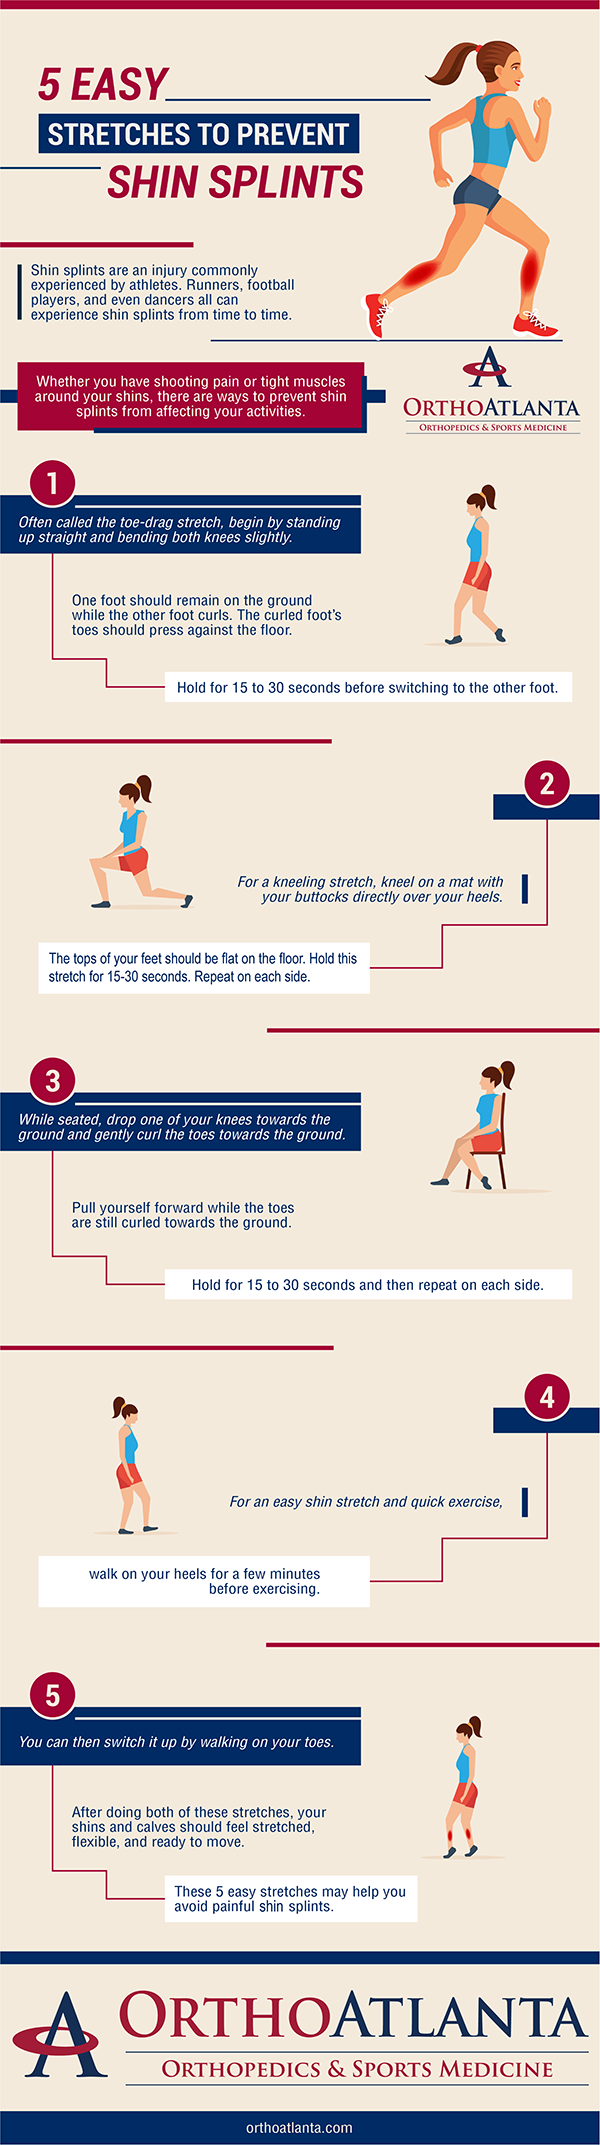 5 Easy Stretches to Prevent Shin Splints